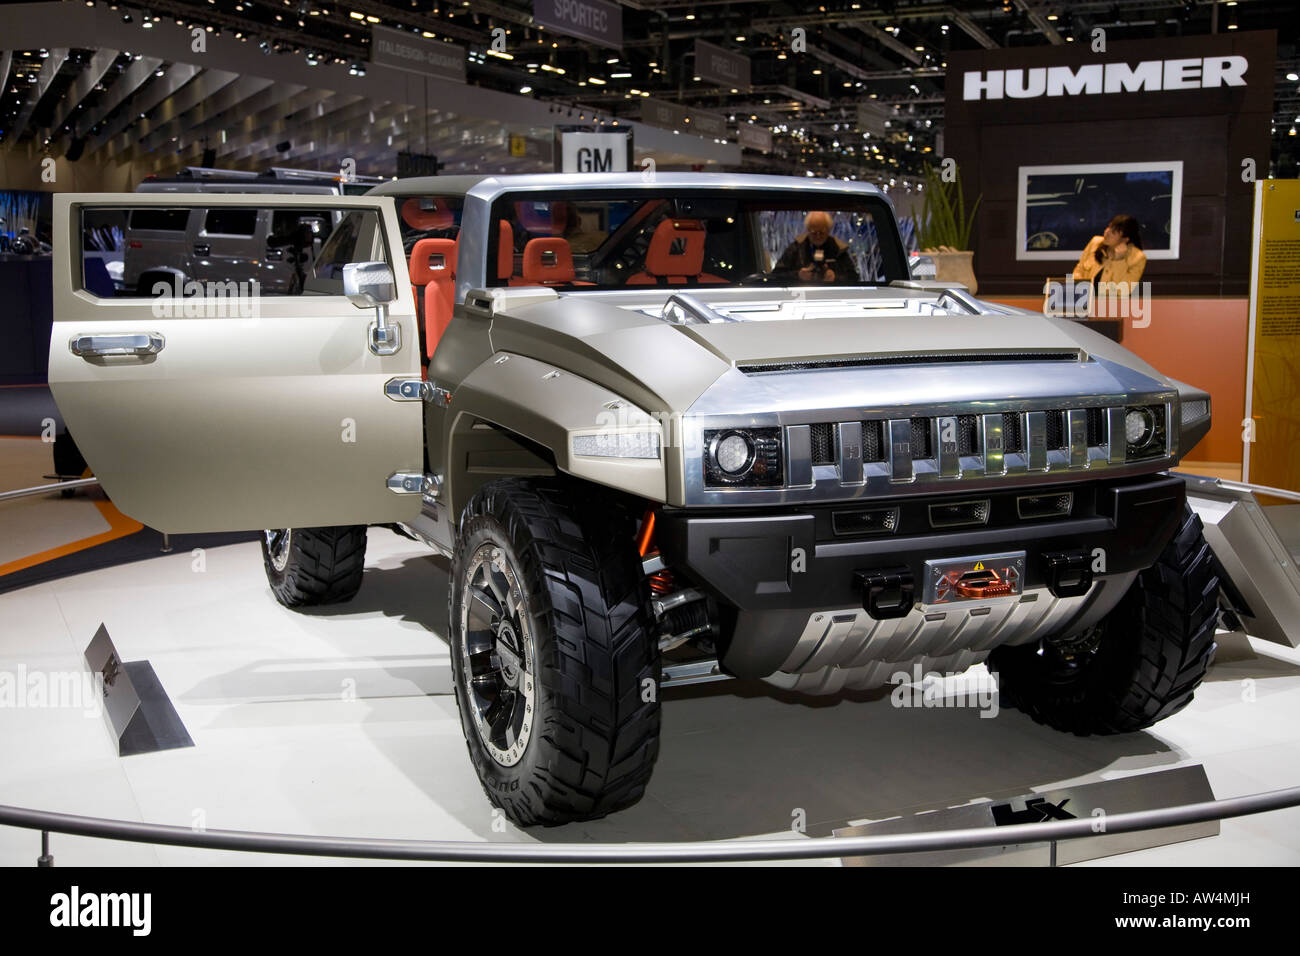 Hummer HX at motor show Stock Photo